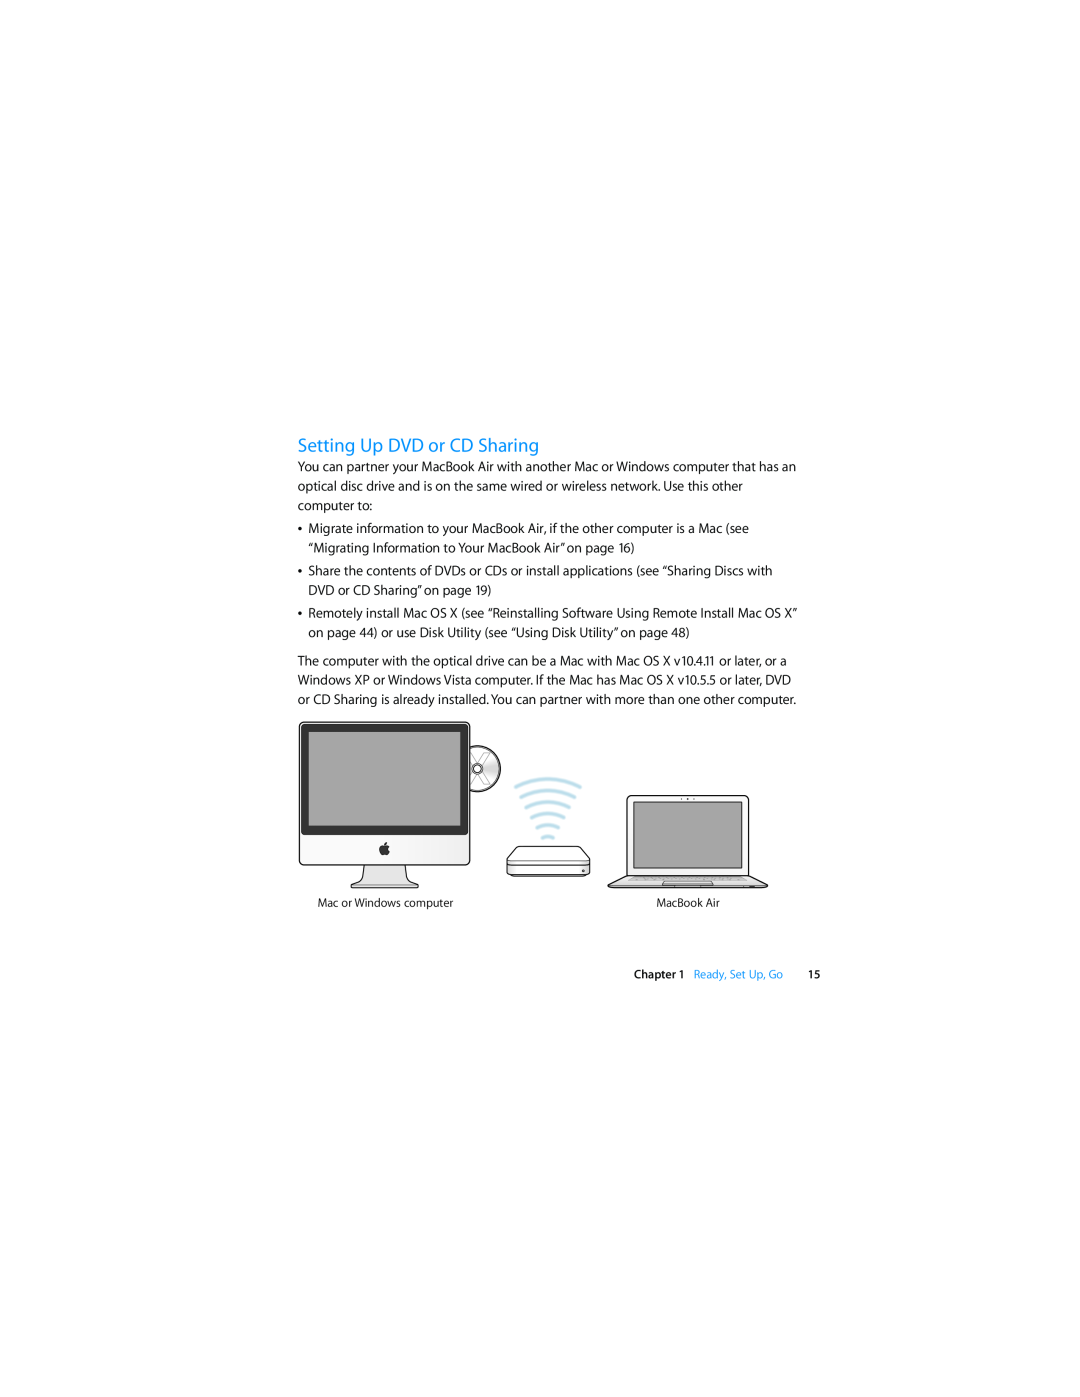 Apple MB003LL/A, MC233LL/A manual Setting Up DVD or CD Sharing 